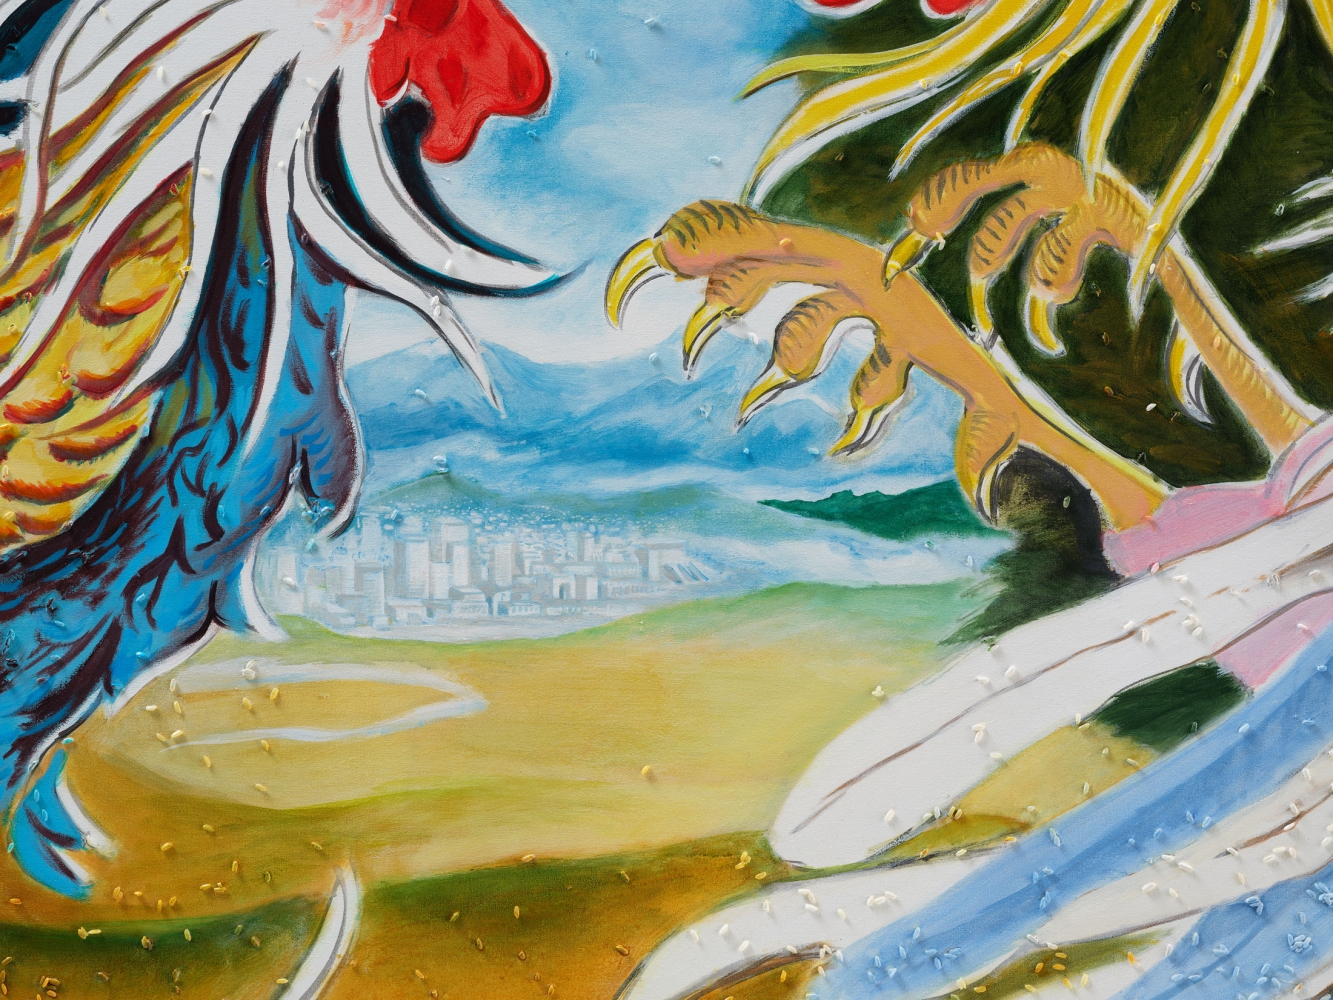 Allison Katz
Noli Me Tangere!, 2021 (Detail)
Oil, acrylic and rice on canvas
78 3/4 x 86 5/8 inches
(200 x 220 cm)